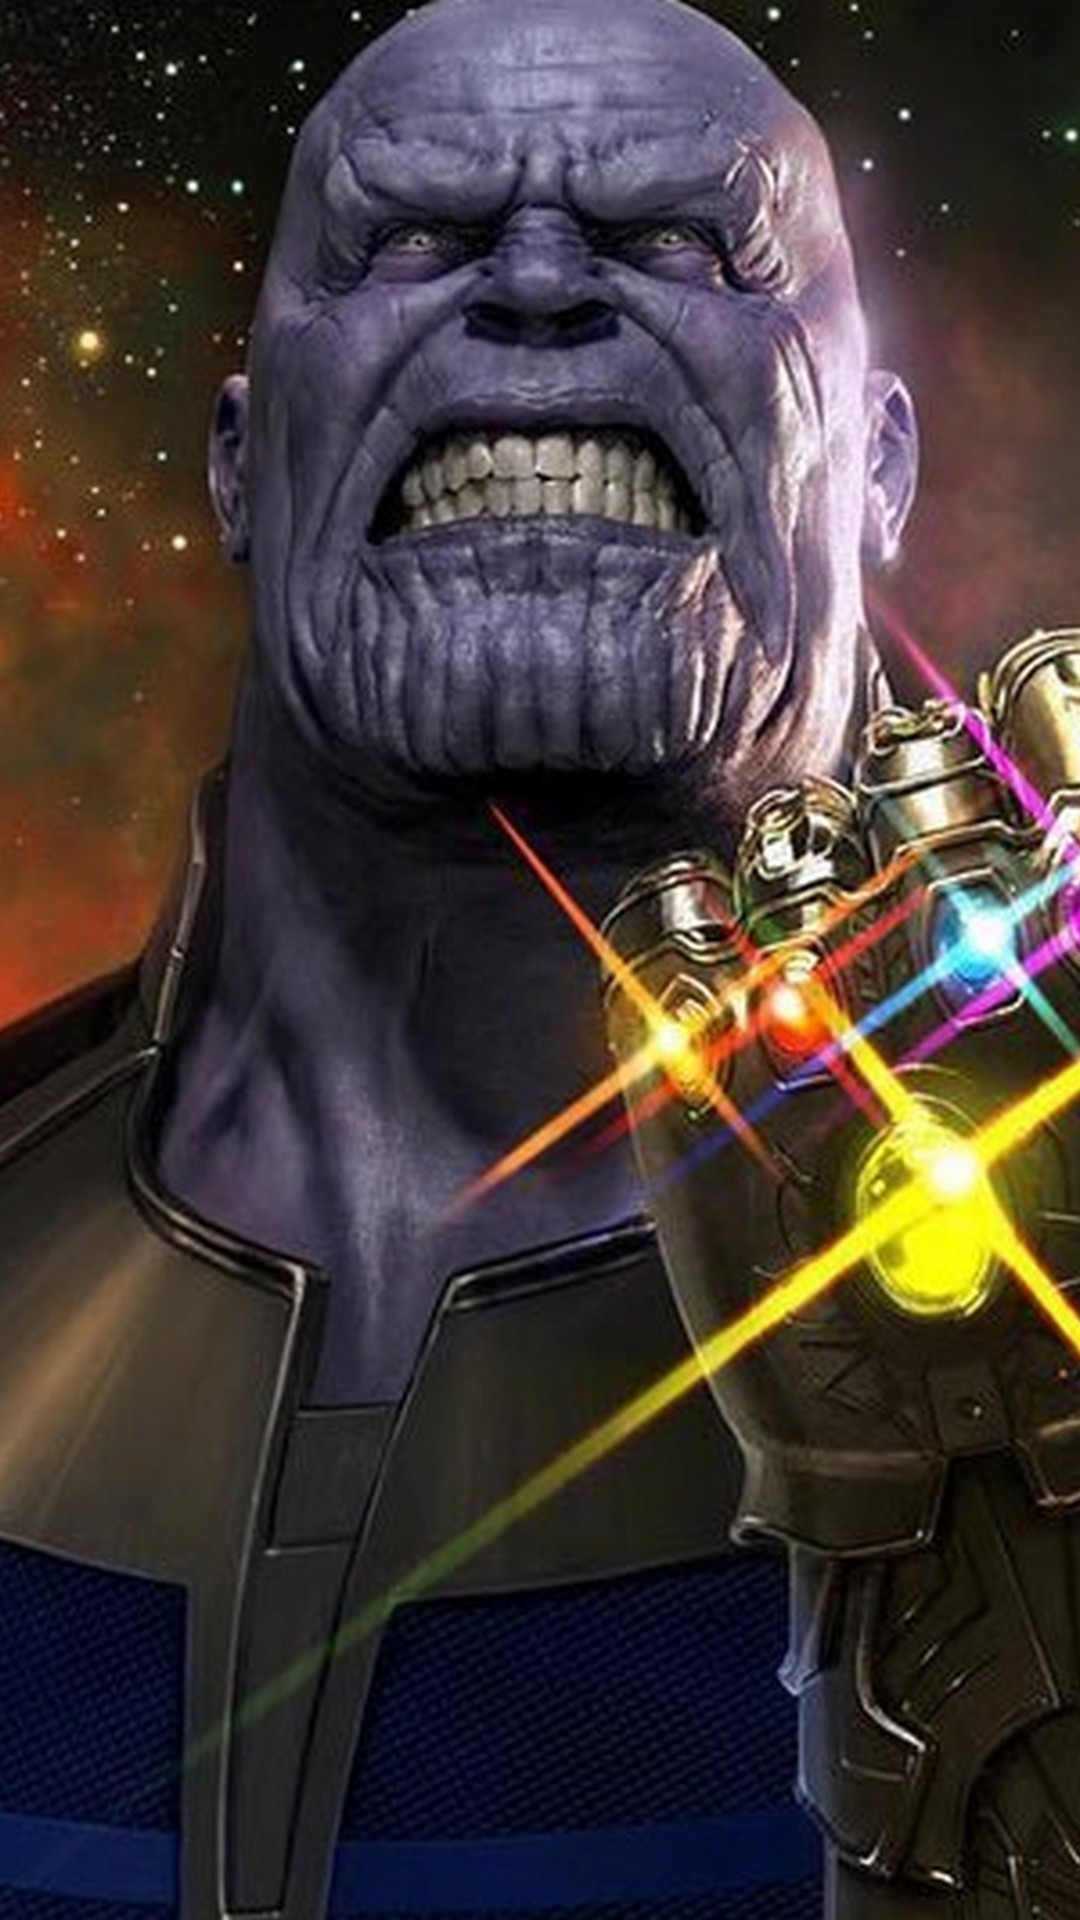 Avengers Infinity War Characters iPhone Wallpaper resolution 1080x1920